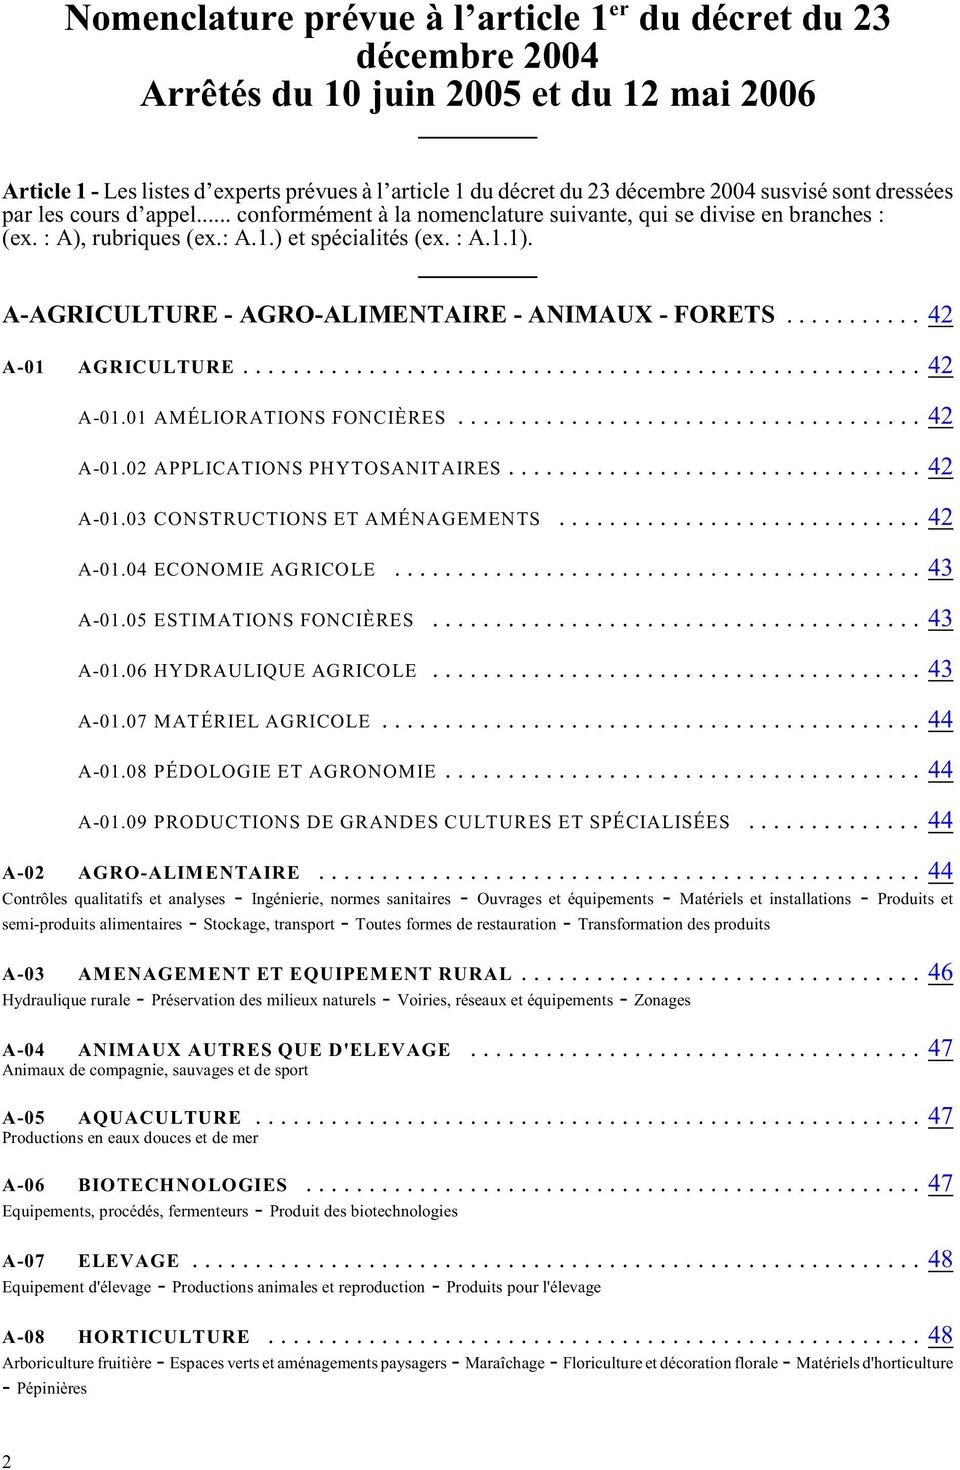 A-AGRICULTURE - AGRO-ALIMENTAIRE - ANIMAUX - FORETS...42 A-01 AGRICULTURE...42 A-01.01 AMÉLIORATIONS FONCIÈRES...42 A-01.02 APPLICATIONS PHYTOSANITAIRES...42 A-01.03 CONSTRUCTIONS ET AMÉNAGEMENTS.